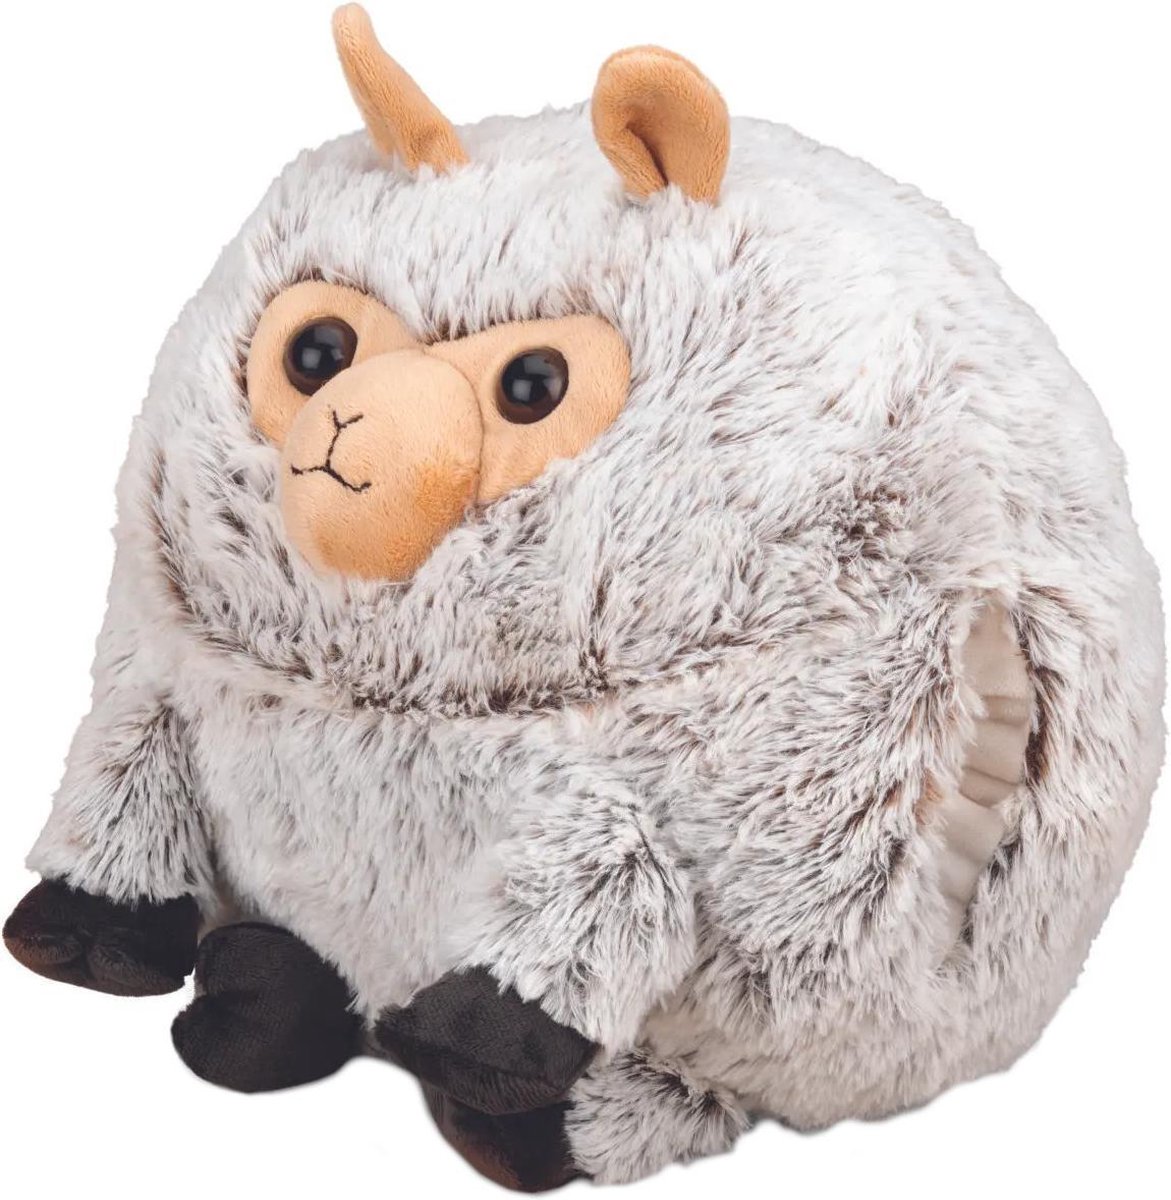 Cuddly Owl chauffe-main coussin câlin animal chaud